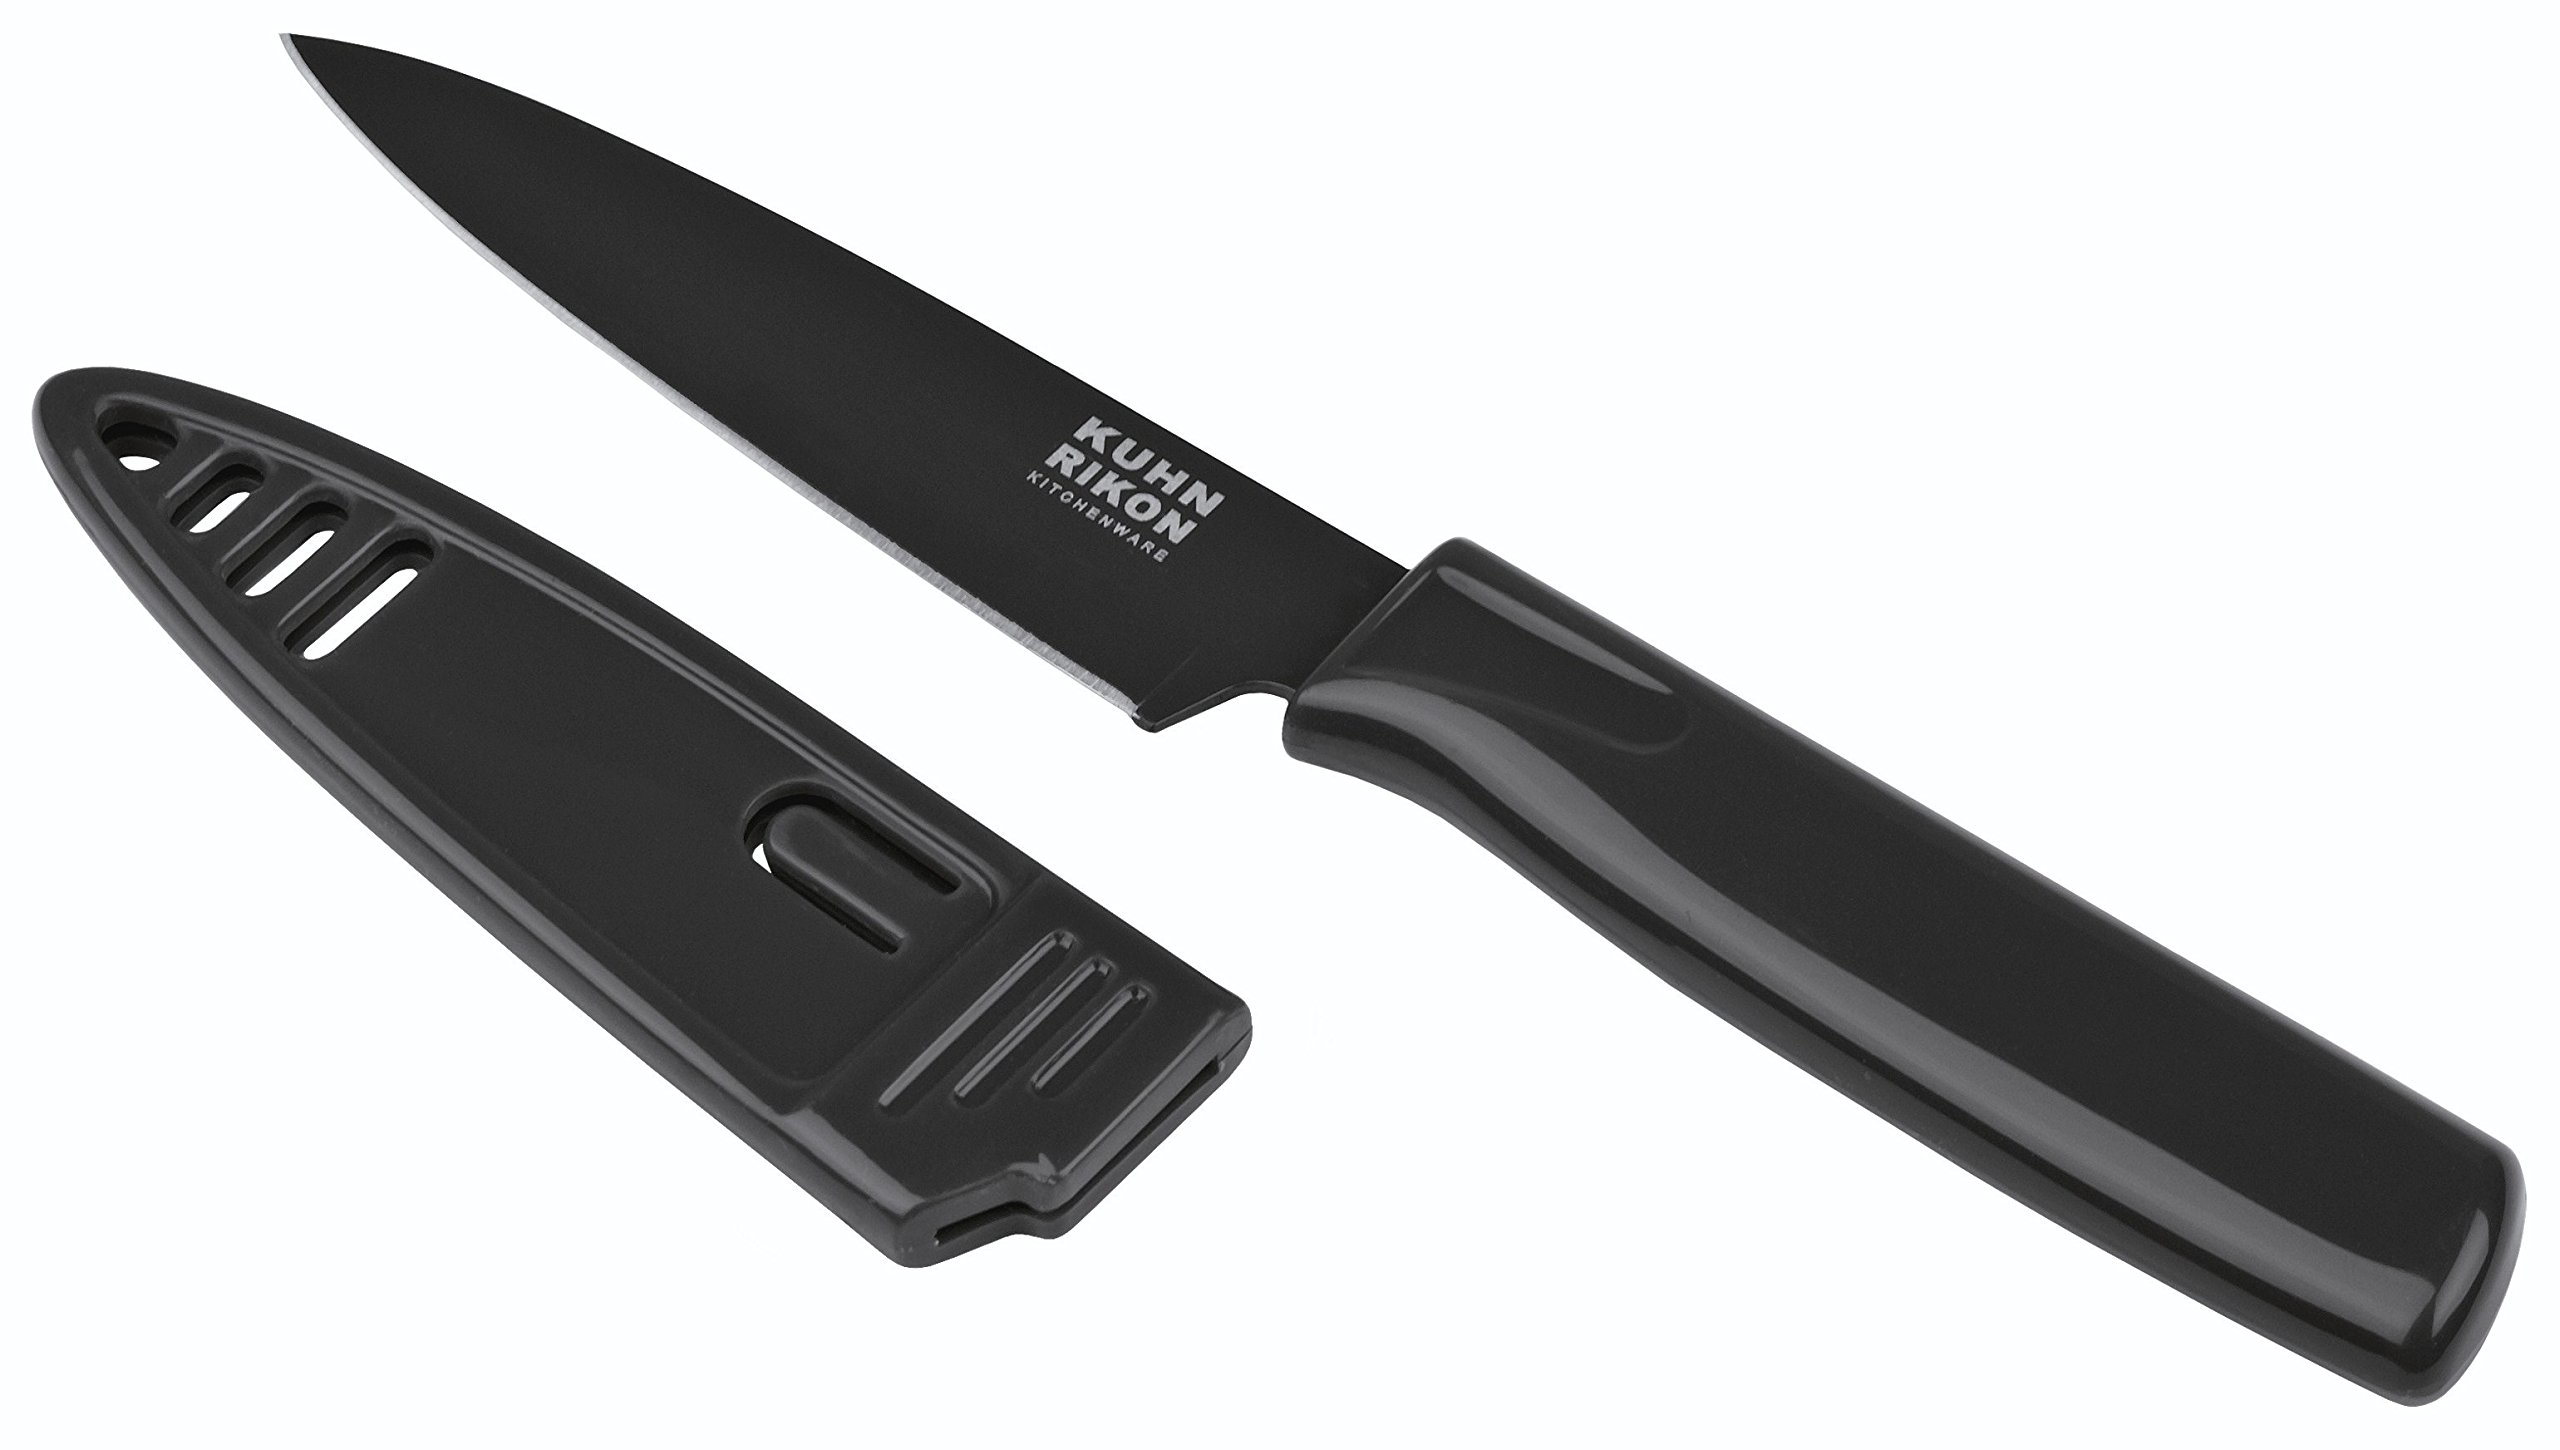 Kuhn Rikon Straight Paring Knife with Safety Sheath, 4 inch/10.16 cm Blade, Black